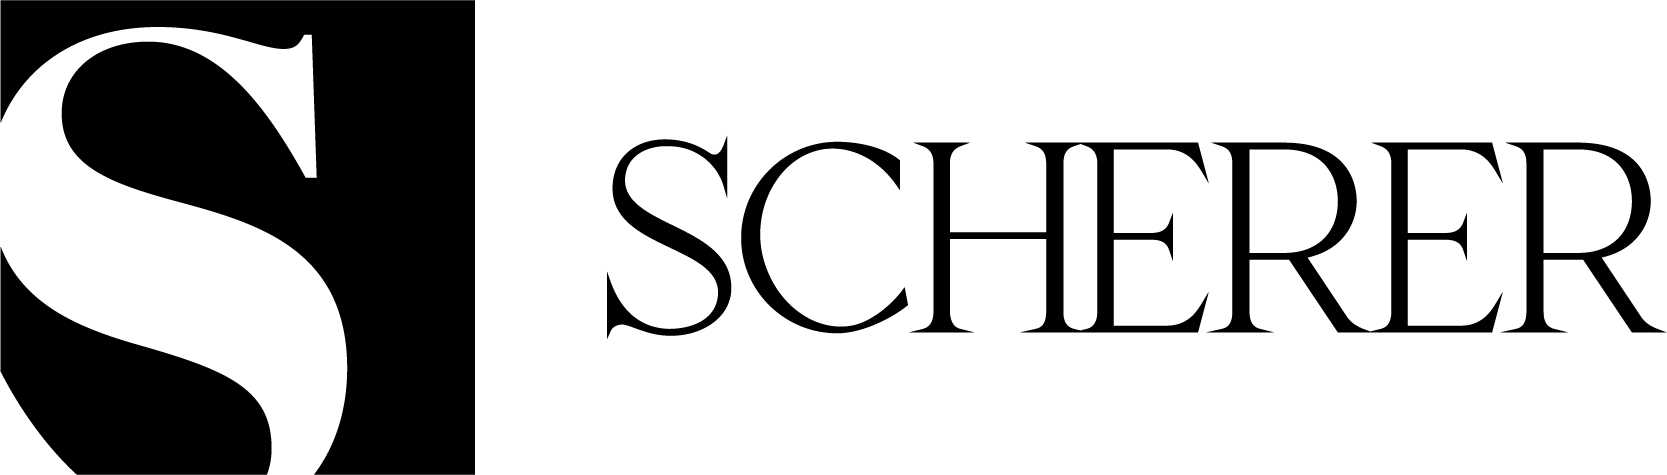 black scherer logo